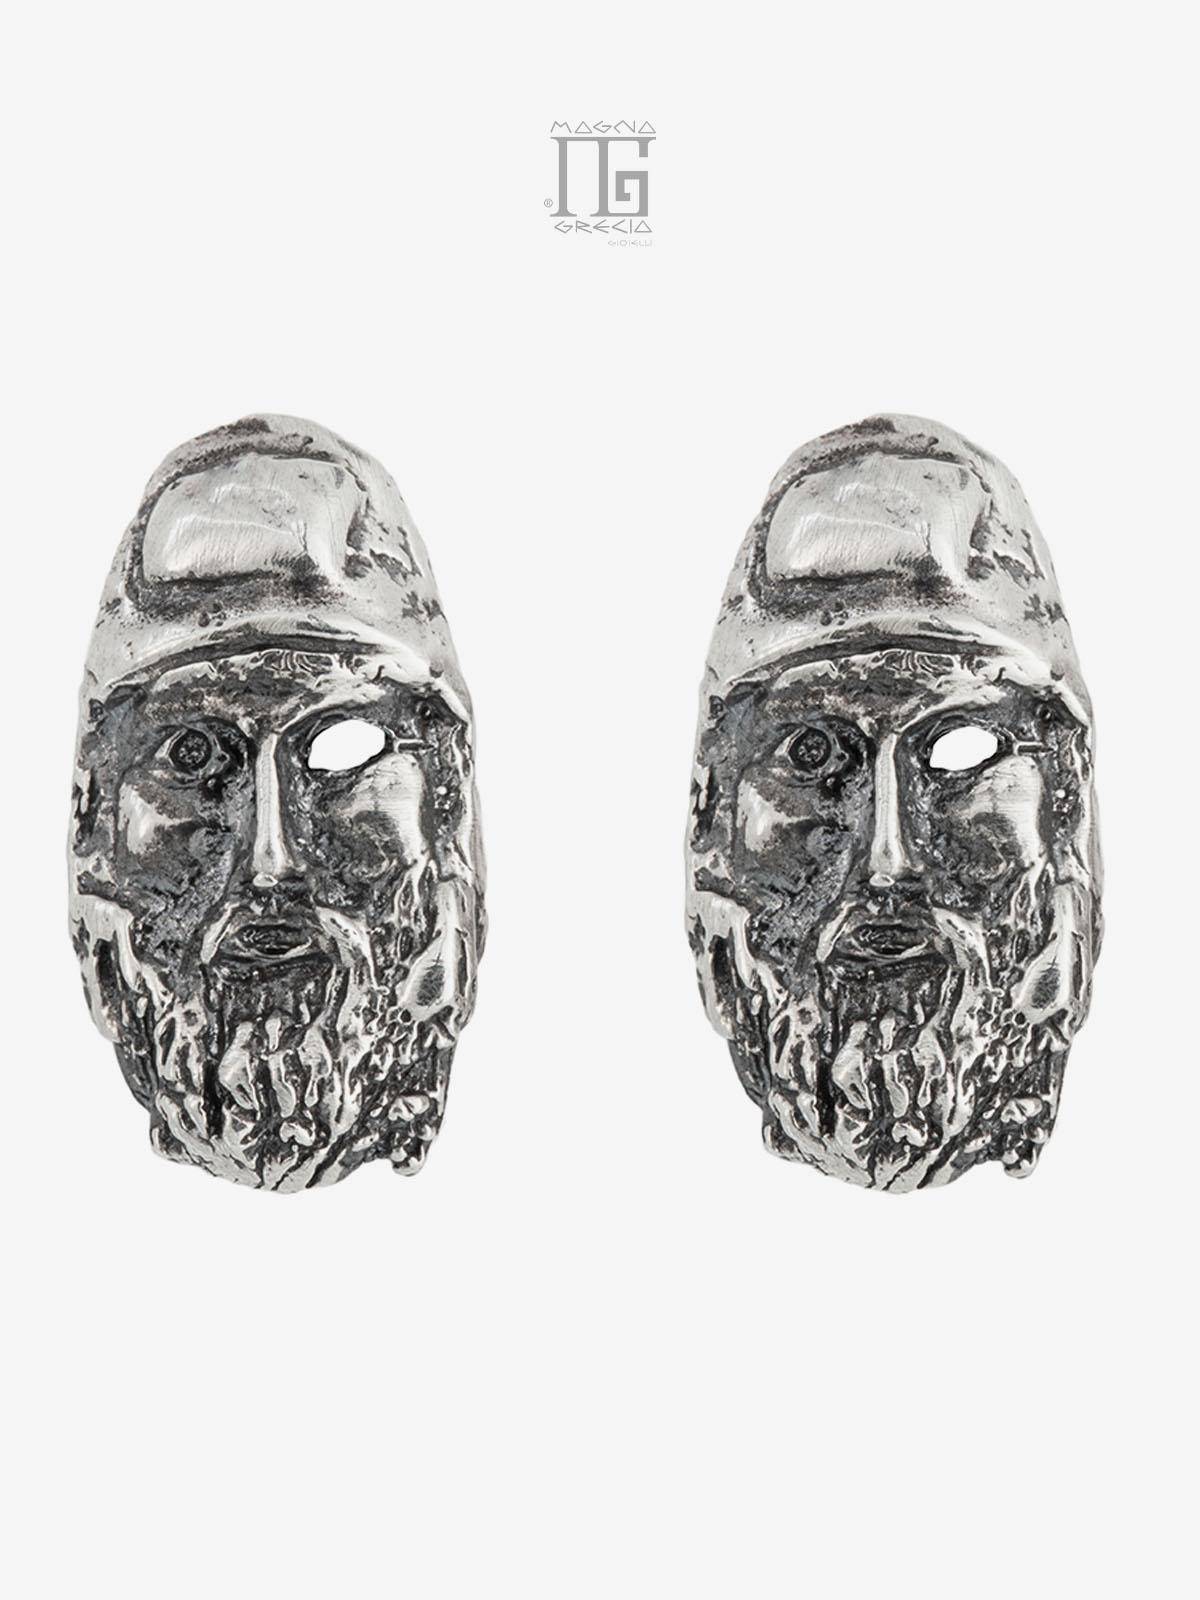 Pendientes de plata que representan la cara del Riace Bronce B Cod. MGK 3838 V